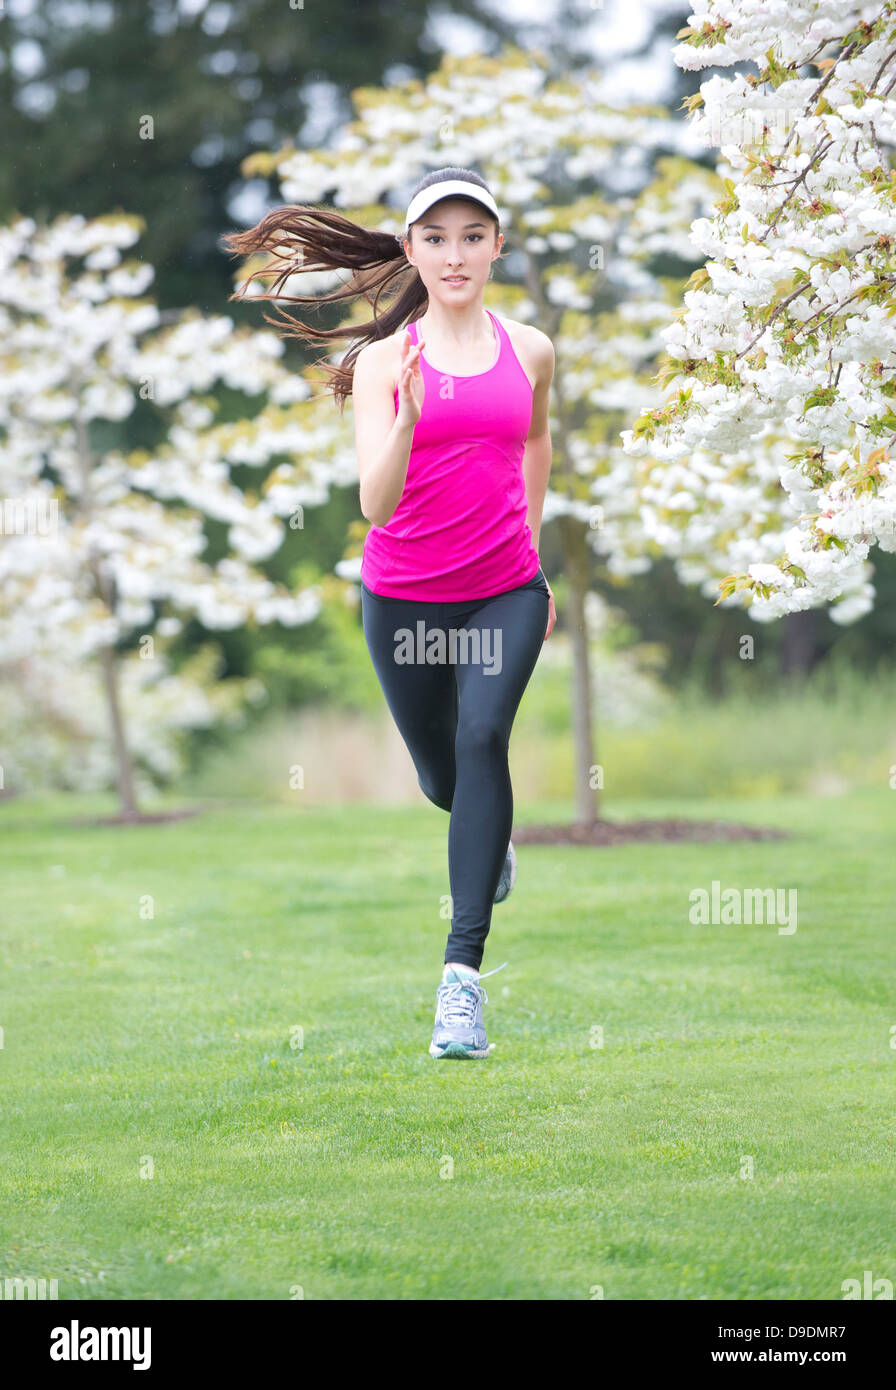 https://c8.alamy.com/comp/D9DMR7/teenage-girl-wearing-pink-sportswear-running-in-park-D9DMR7.jpg